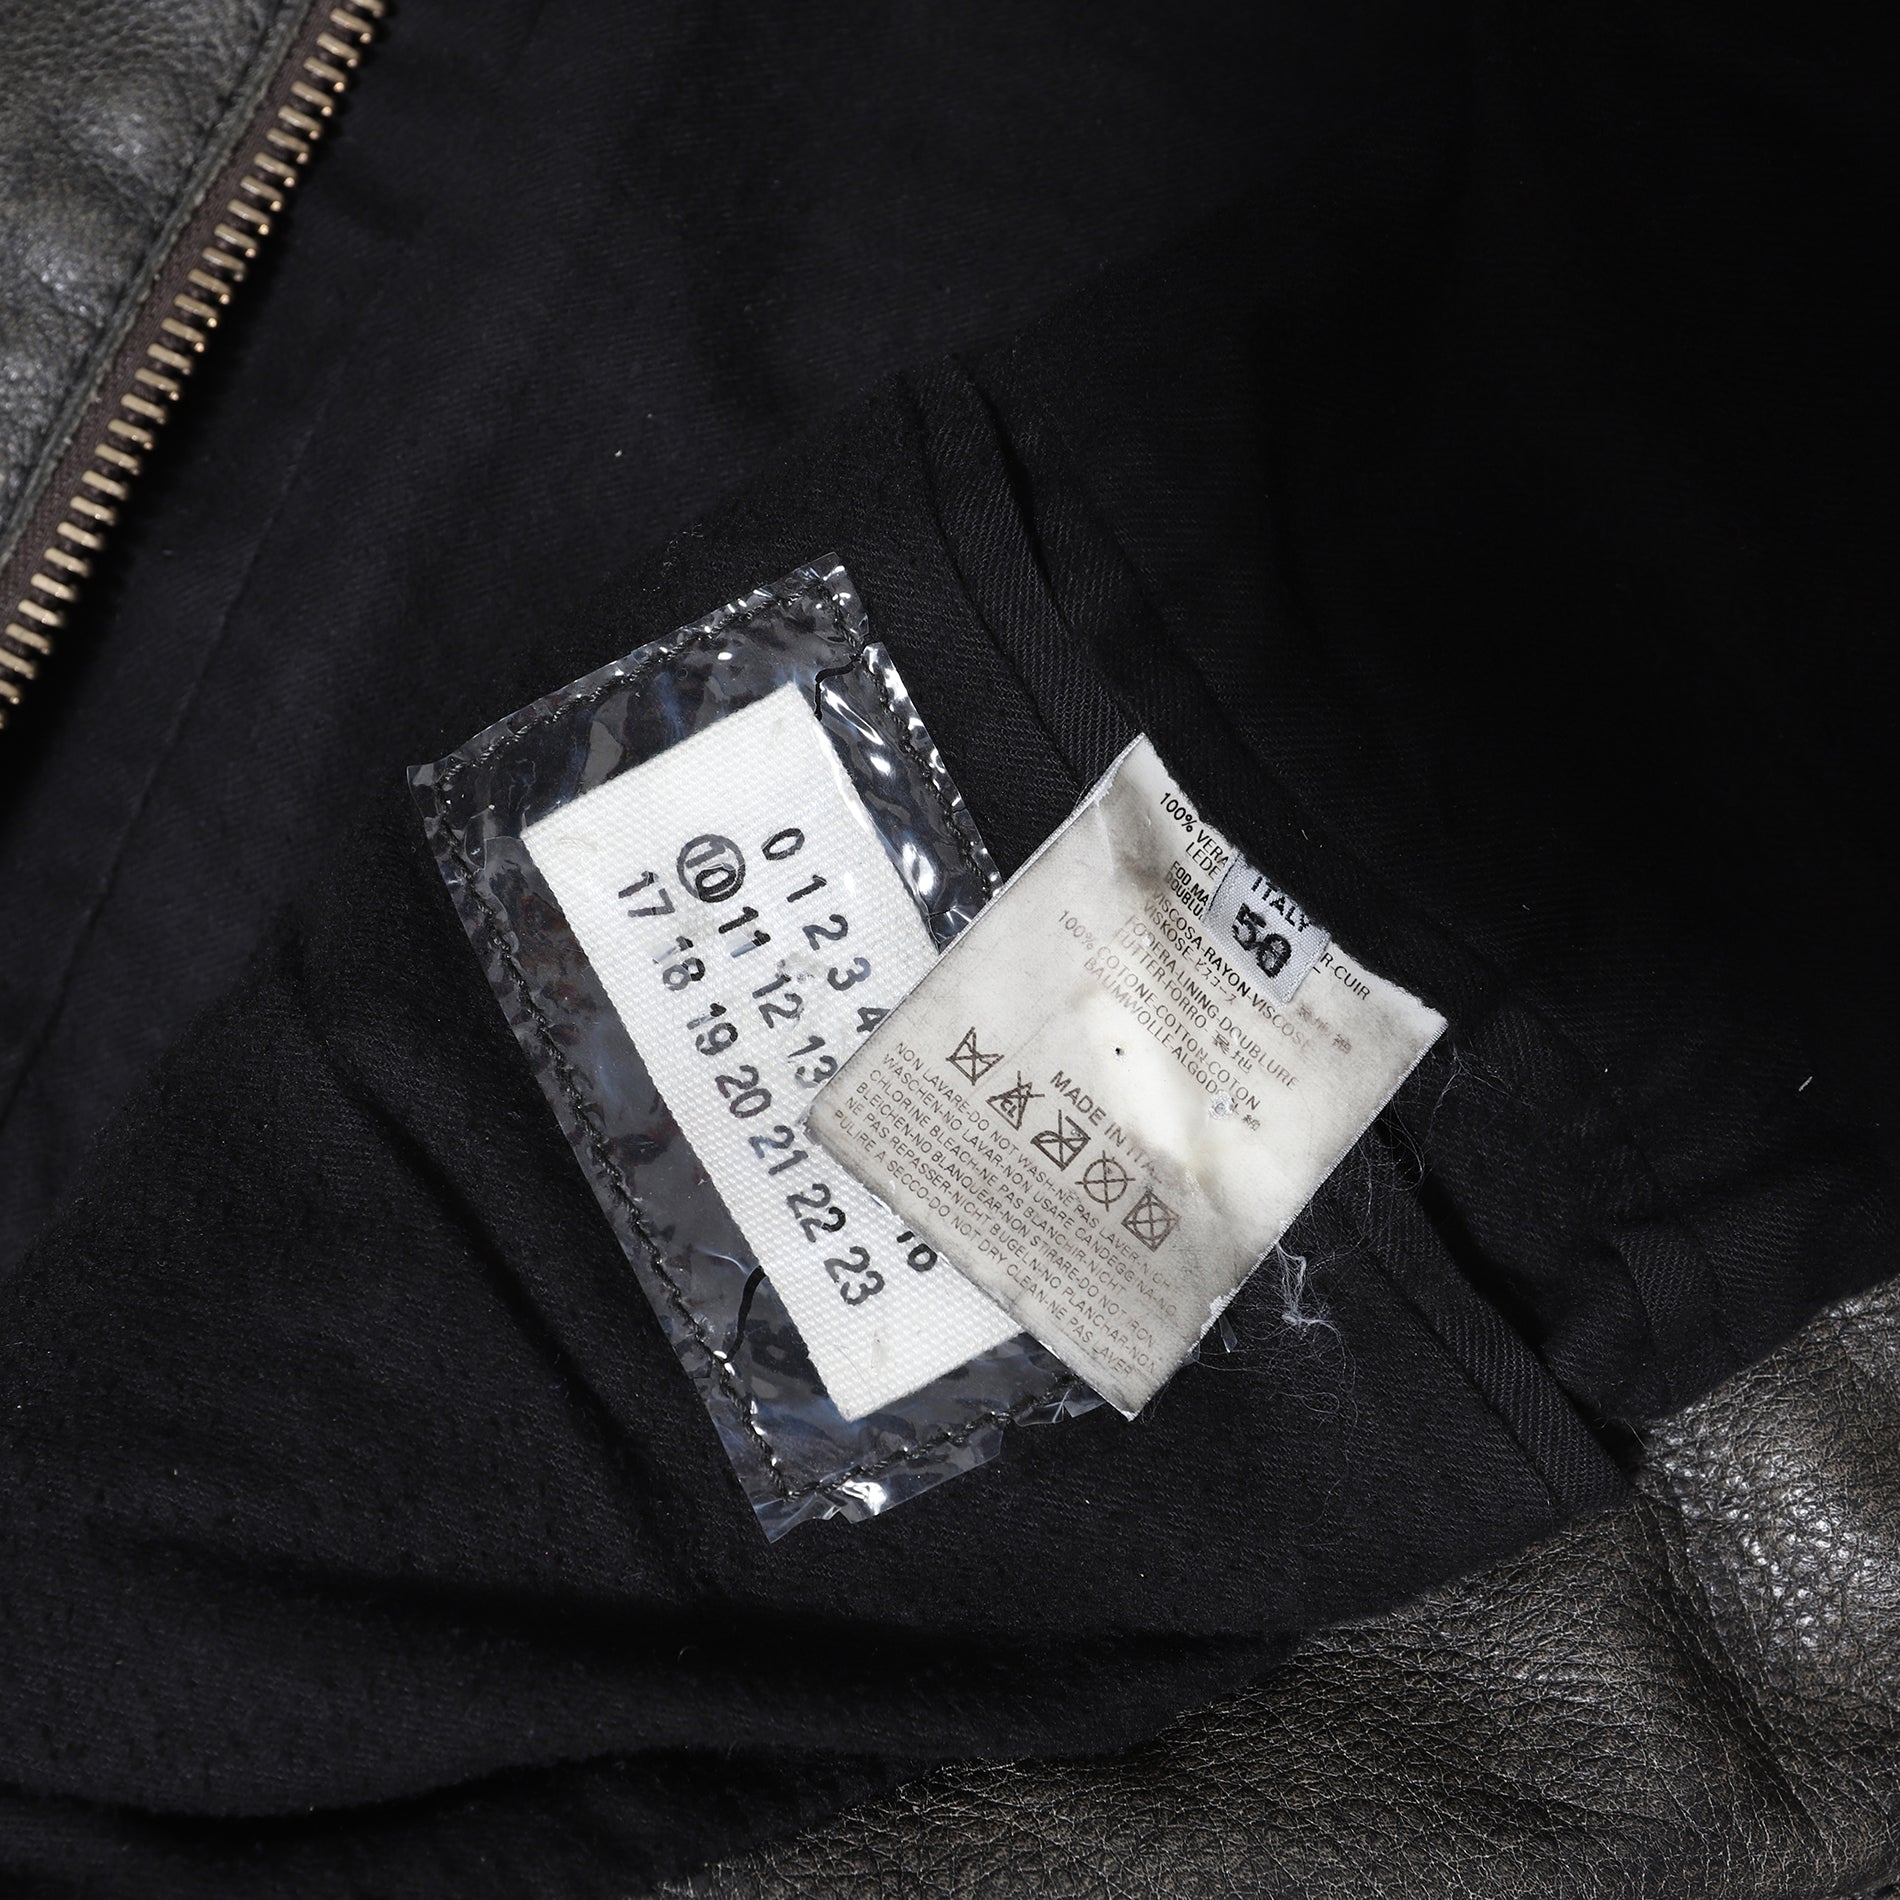 Maison Martin Margiela SS02 5-Zip Distressed Leather Jacket